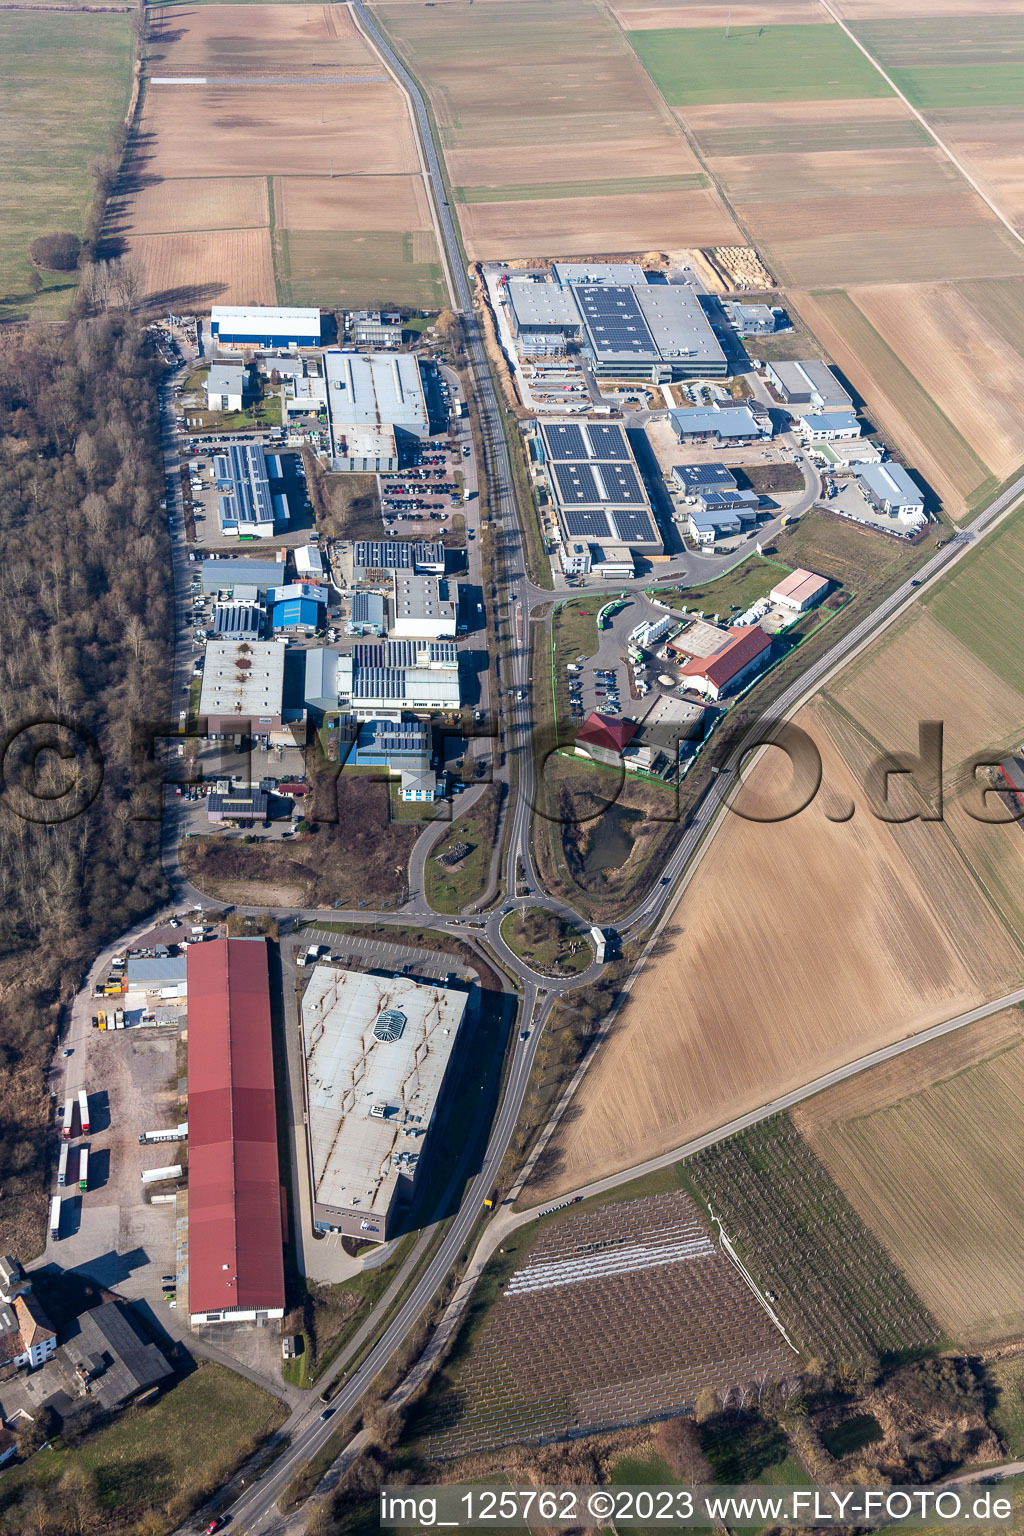 Industrial estate Gewerbepark West II in Herxheim bei Landau (Pfalz) in the state Rhineland-Palatinate, Germany